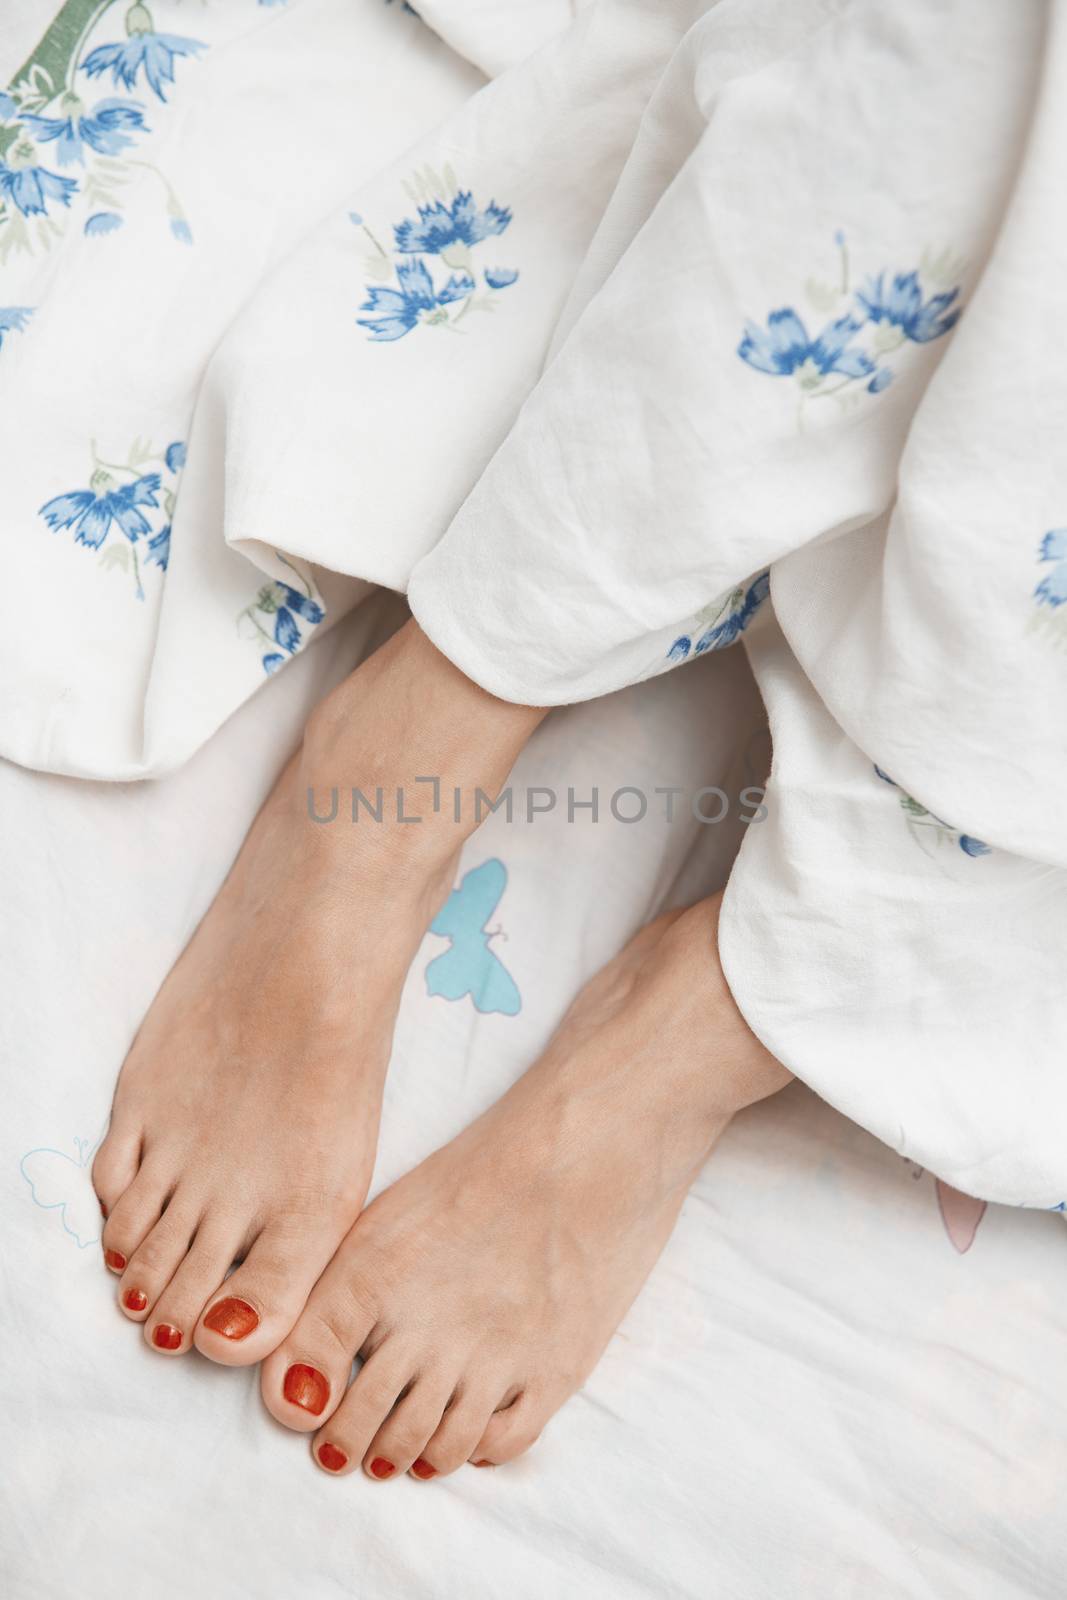 Feet of woman. Vertical photo